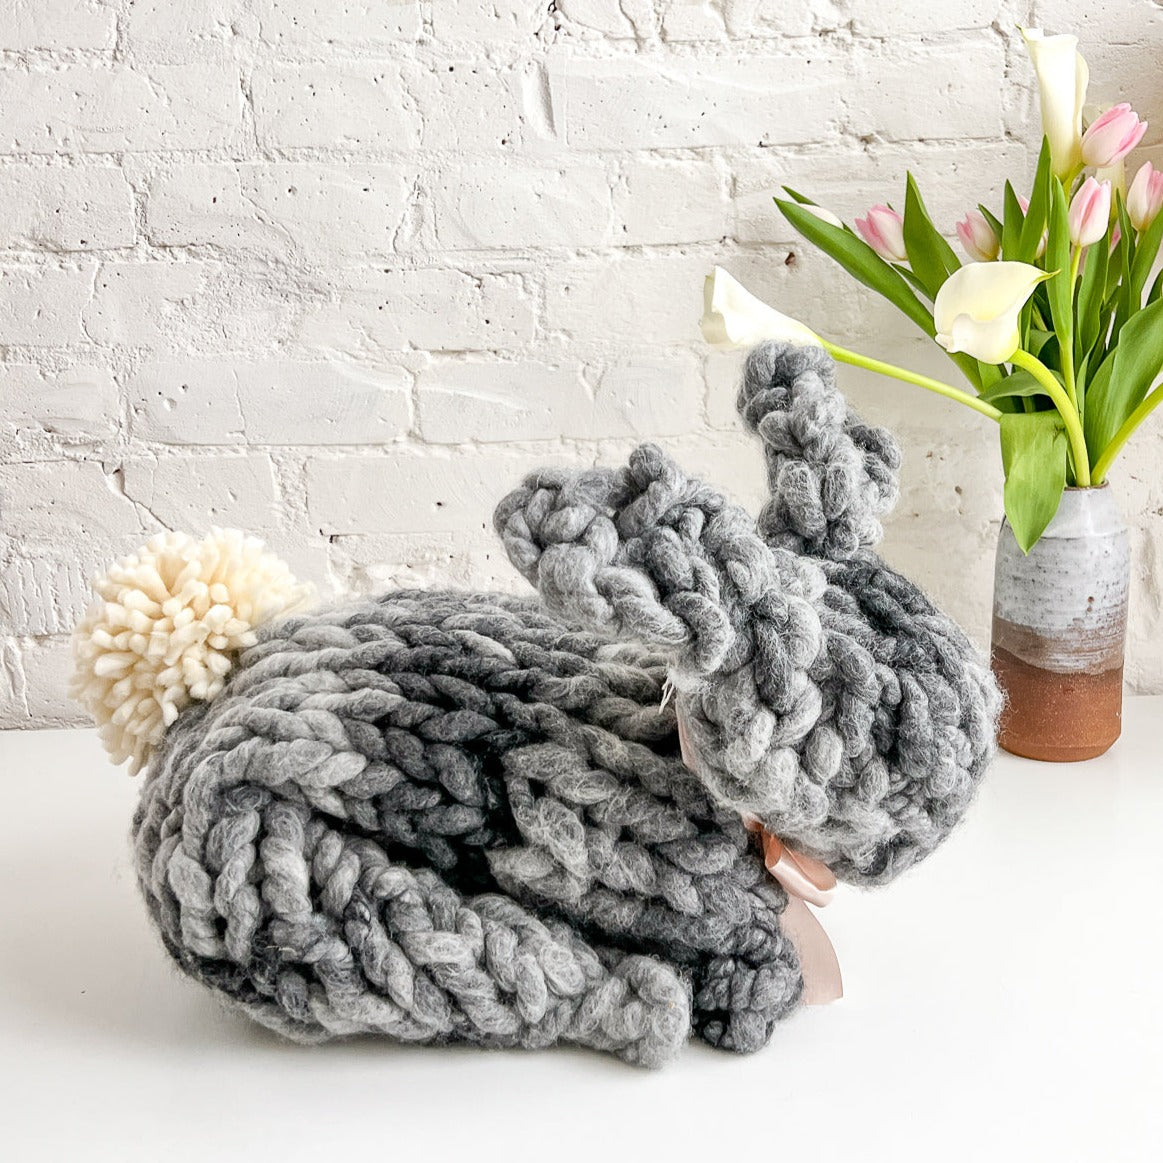 Crochet Mini-Bunny Kit